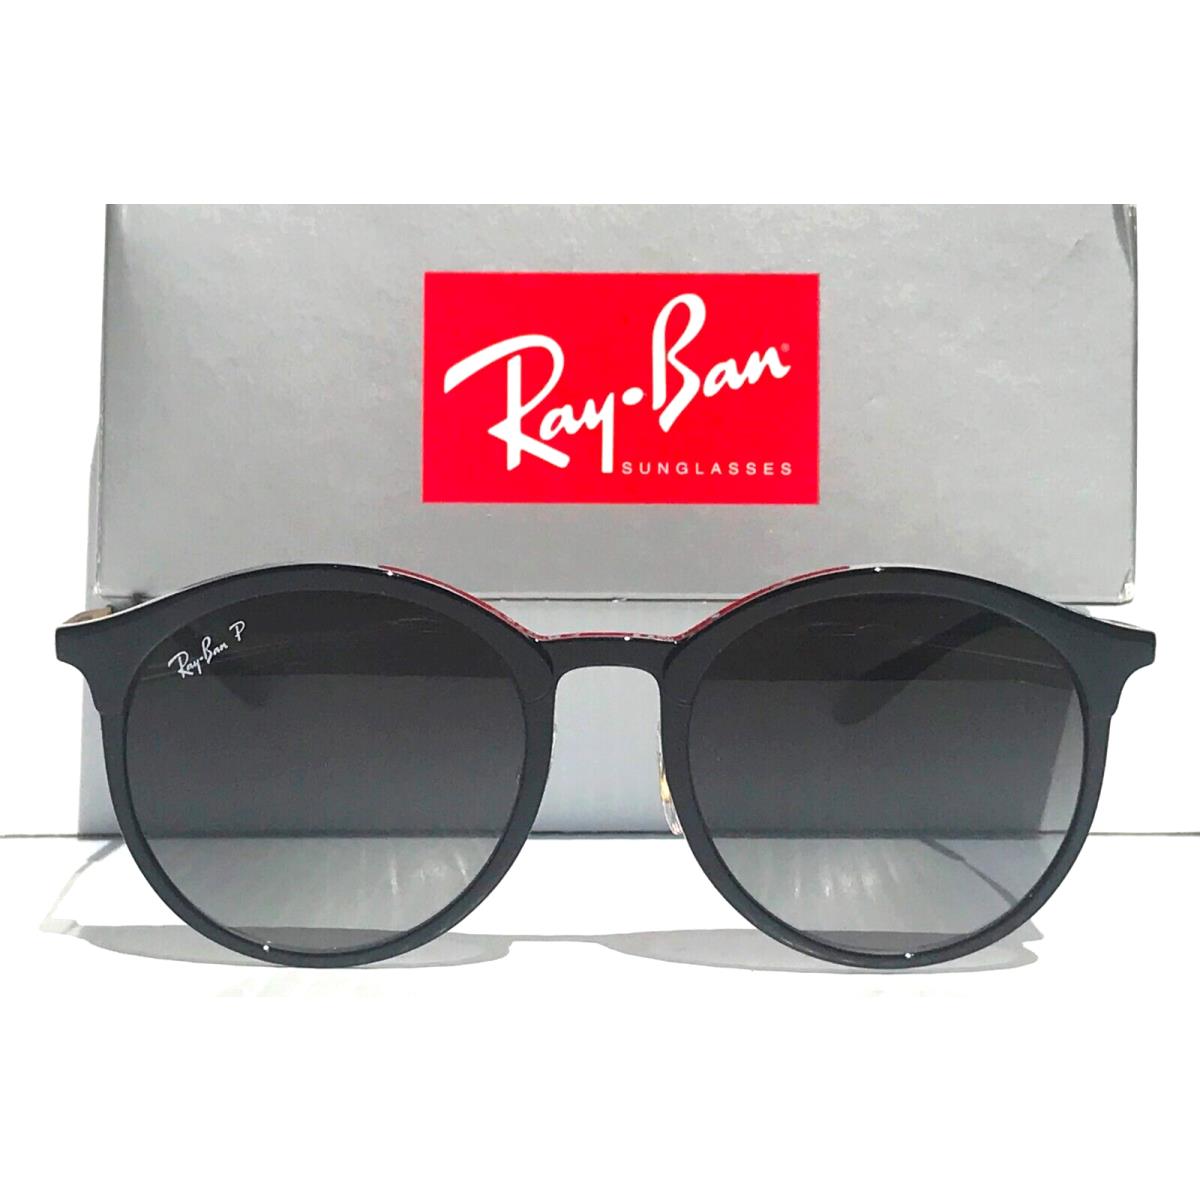 Ray-Ban sunglasses Emma - Frame: Black and Gold, Lens: Grey 0